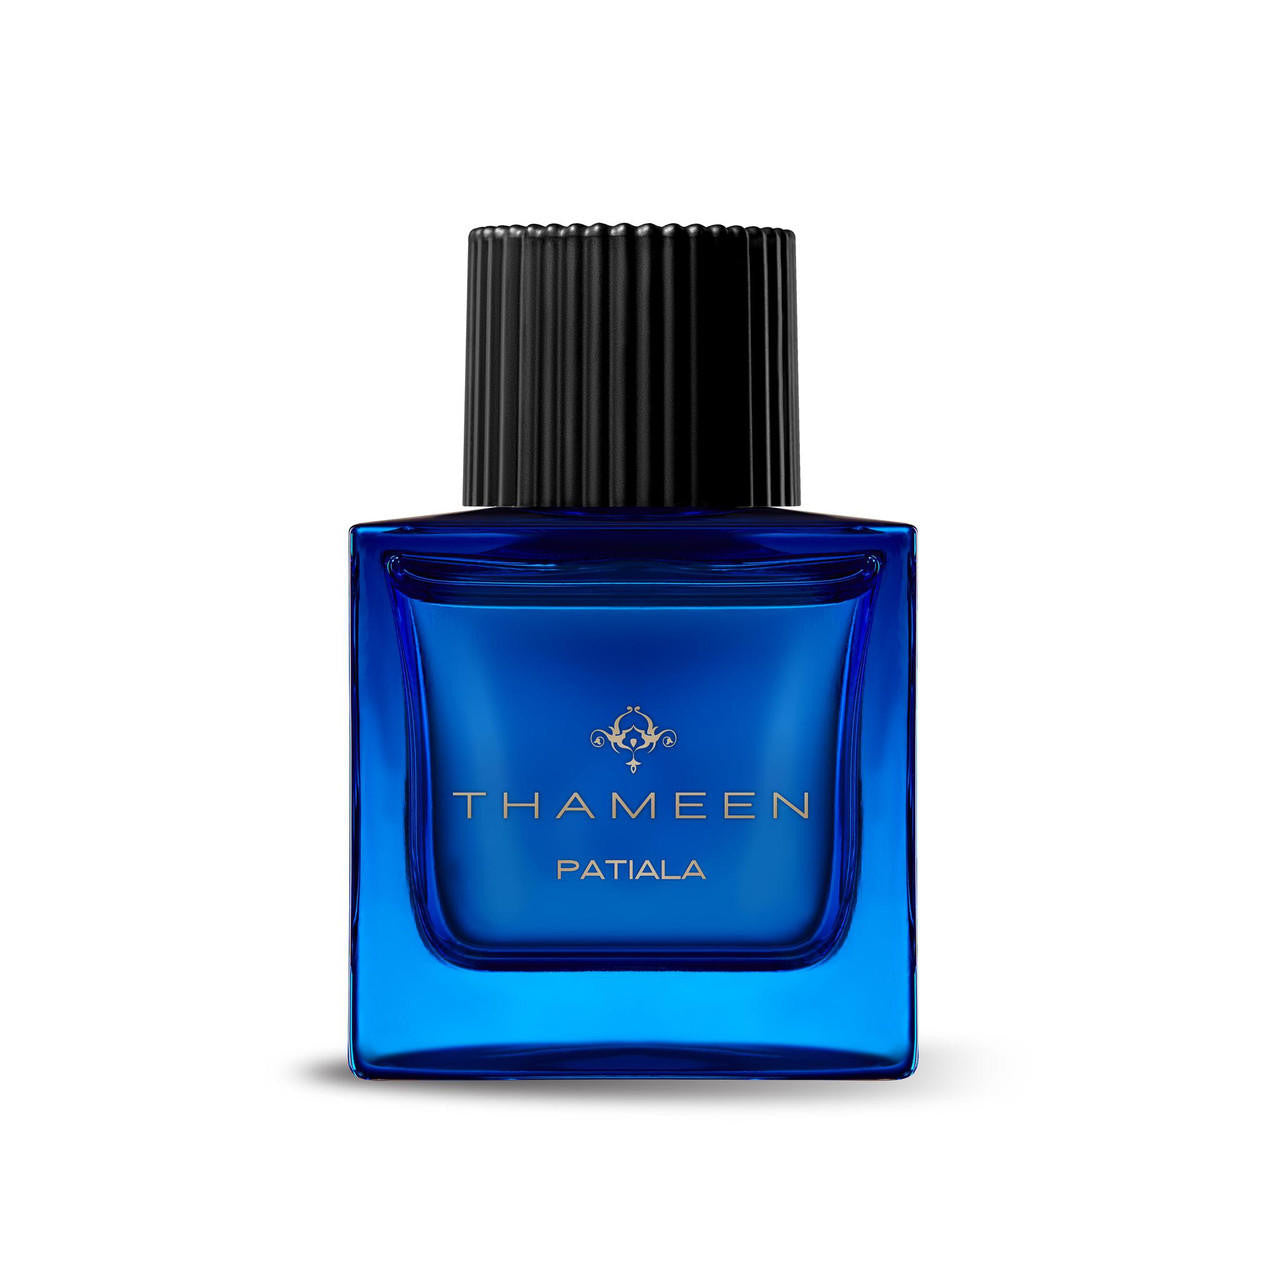  Thameen PATIALA Extrait de Parfum 